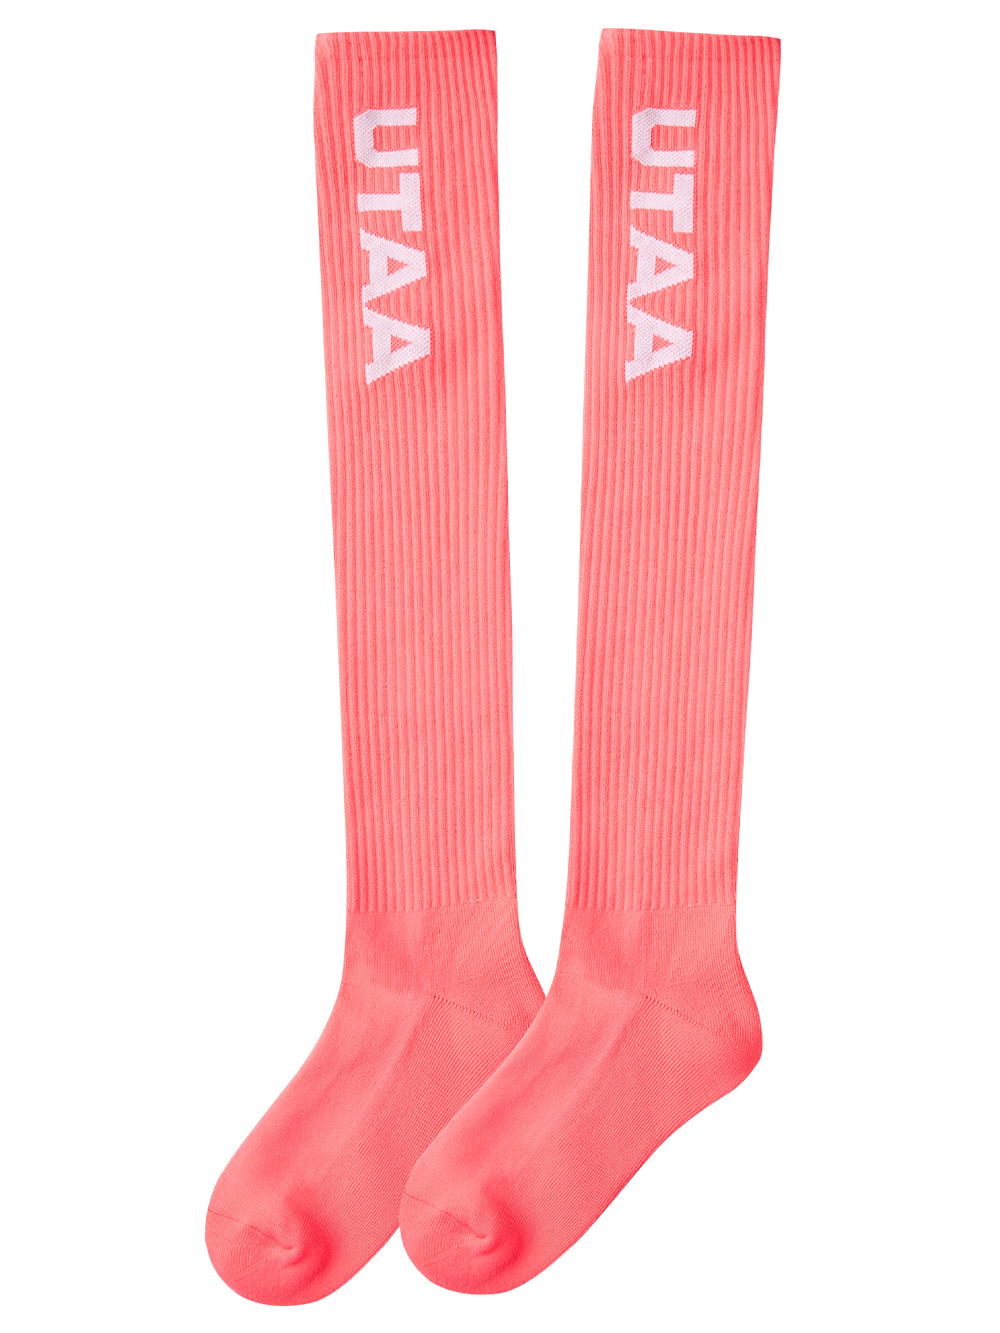 UTAA Logo Knee Socks : Pink  (UC0GSF141PK)